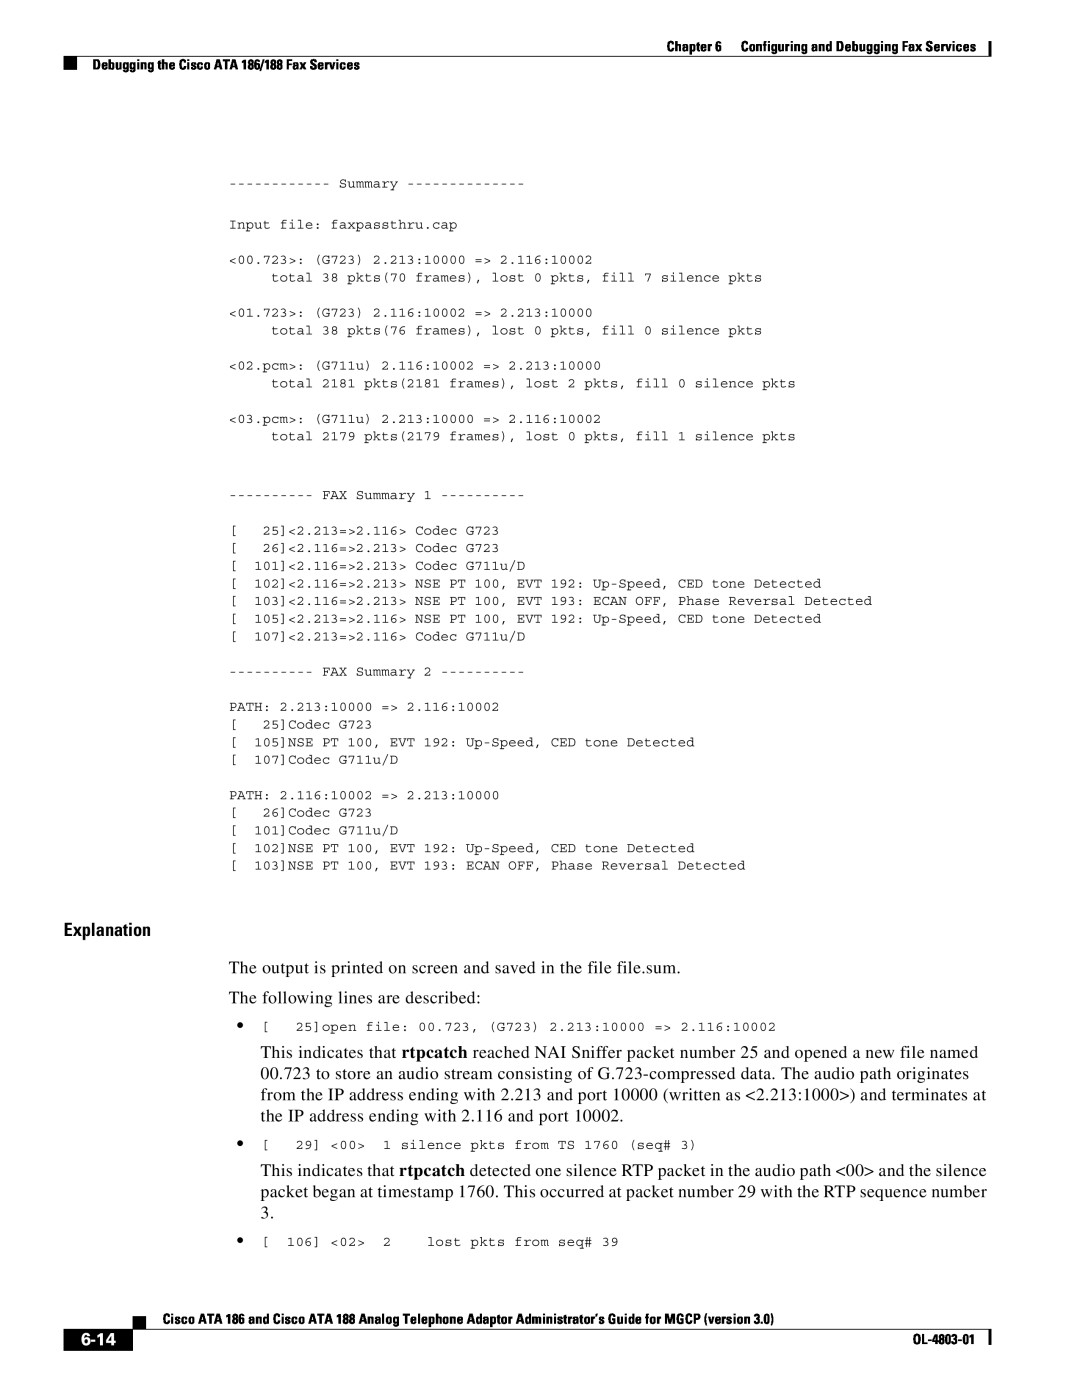 Cisco Systems ATA 186 manual Explanation, 6-14 